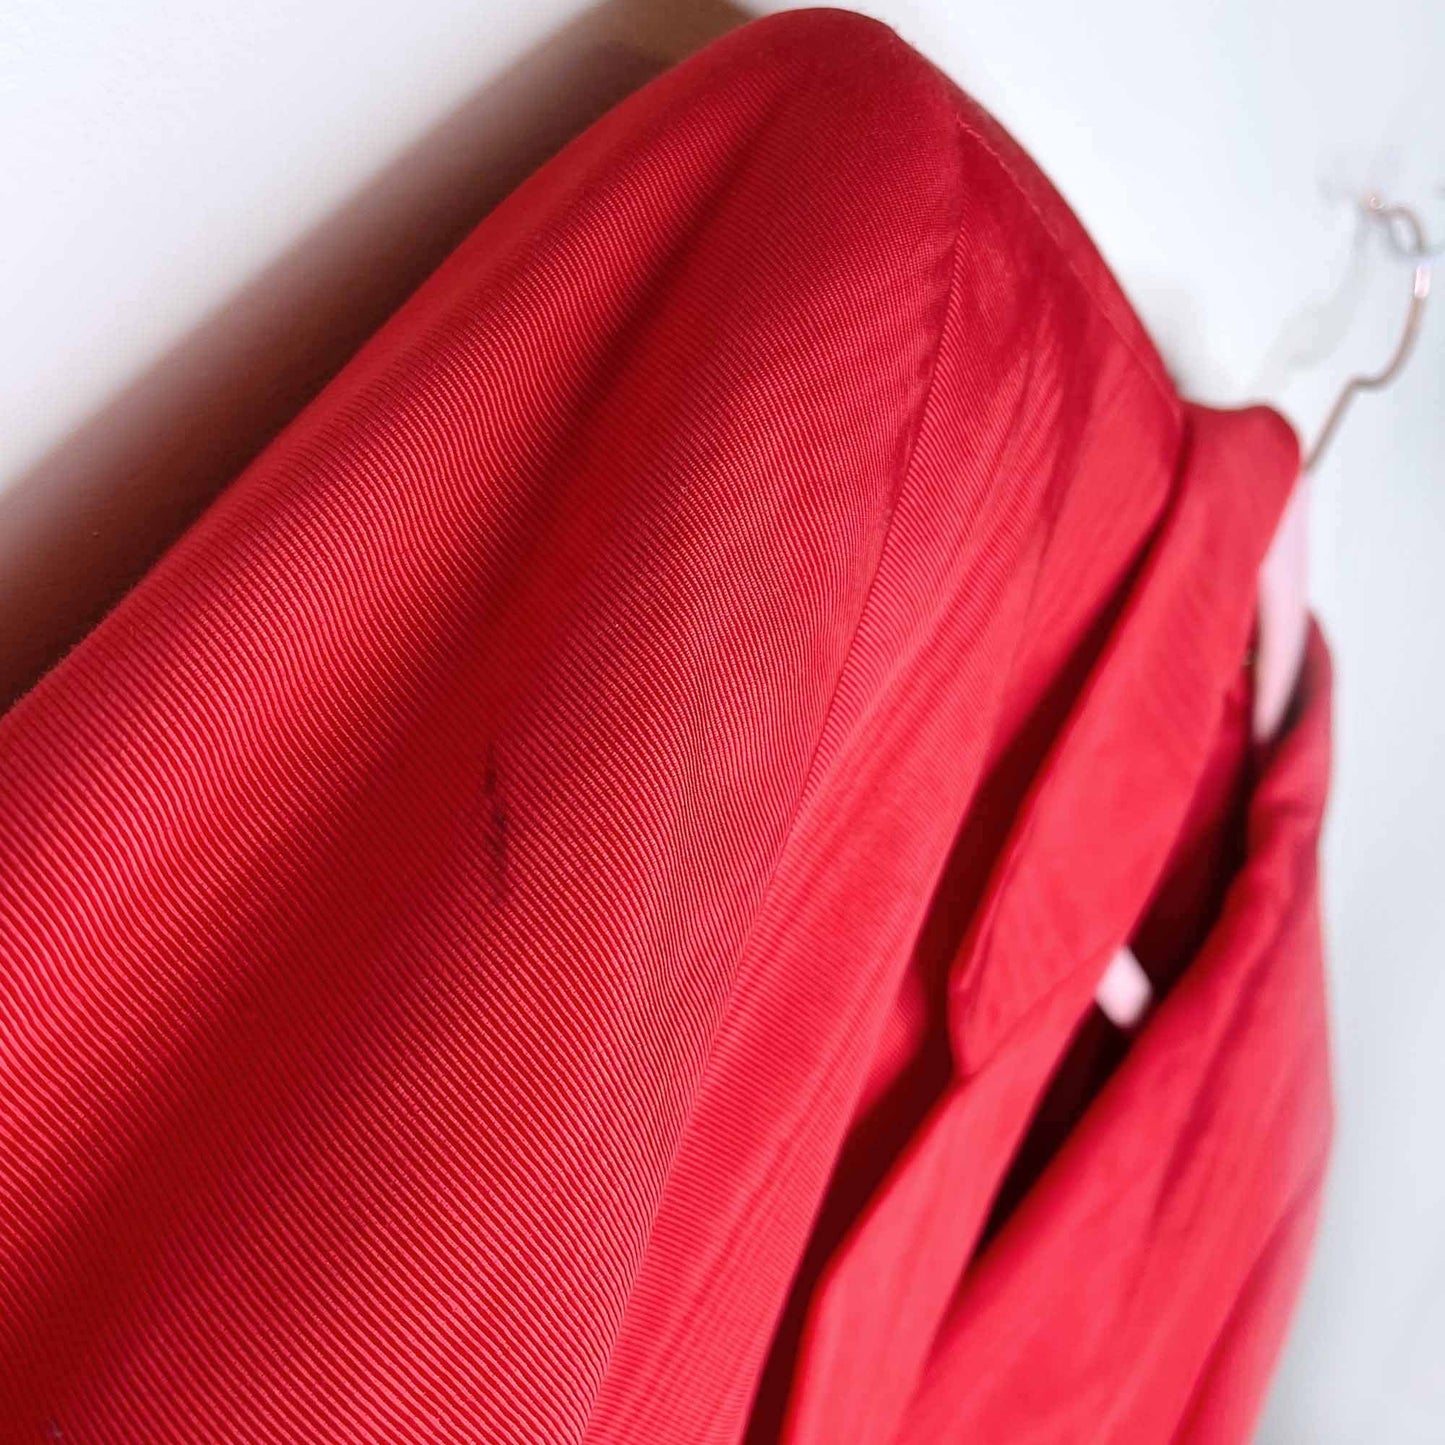 vintage escada red skirt suit set - size 40